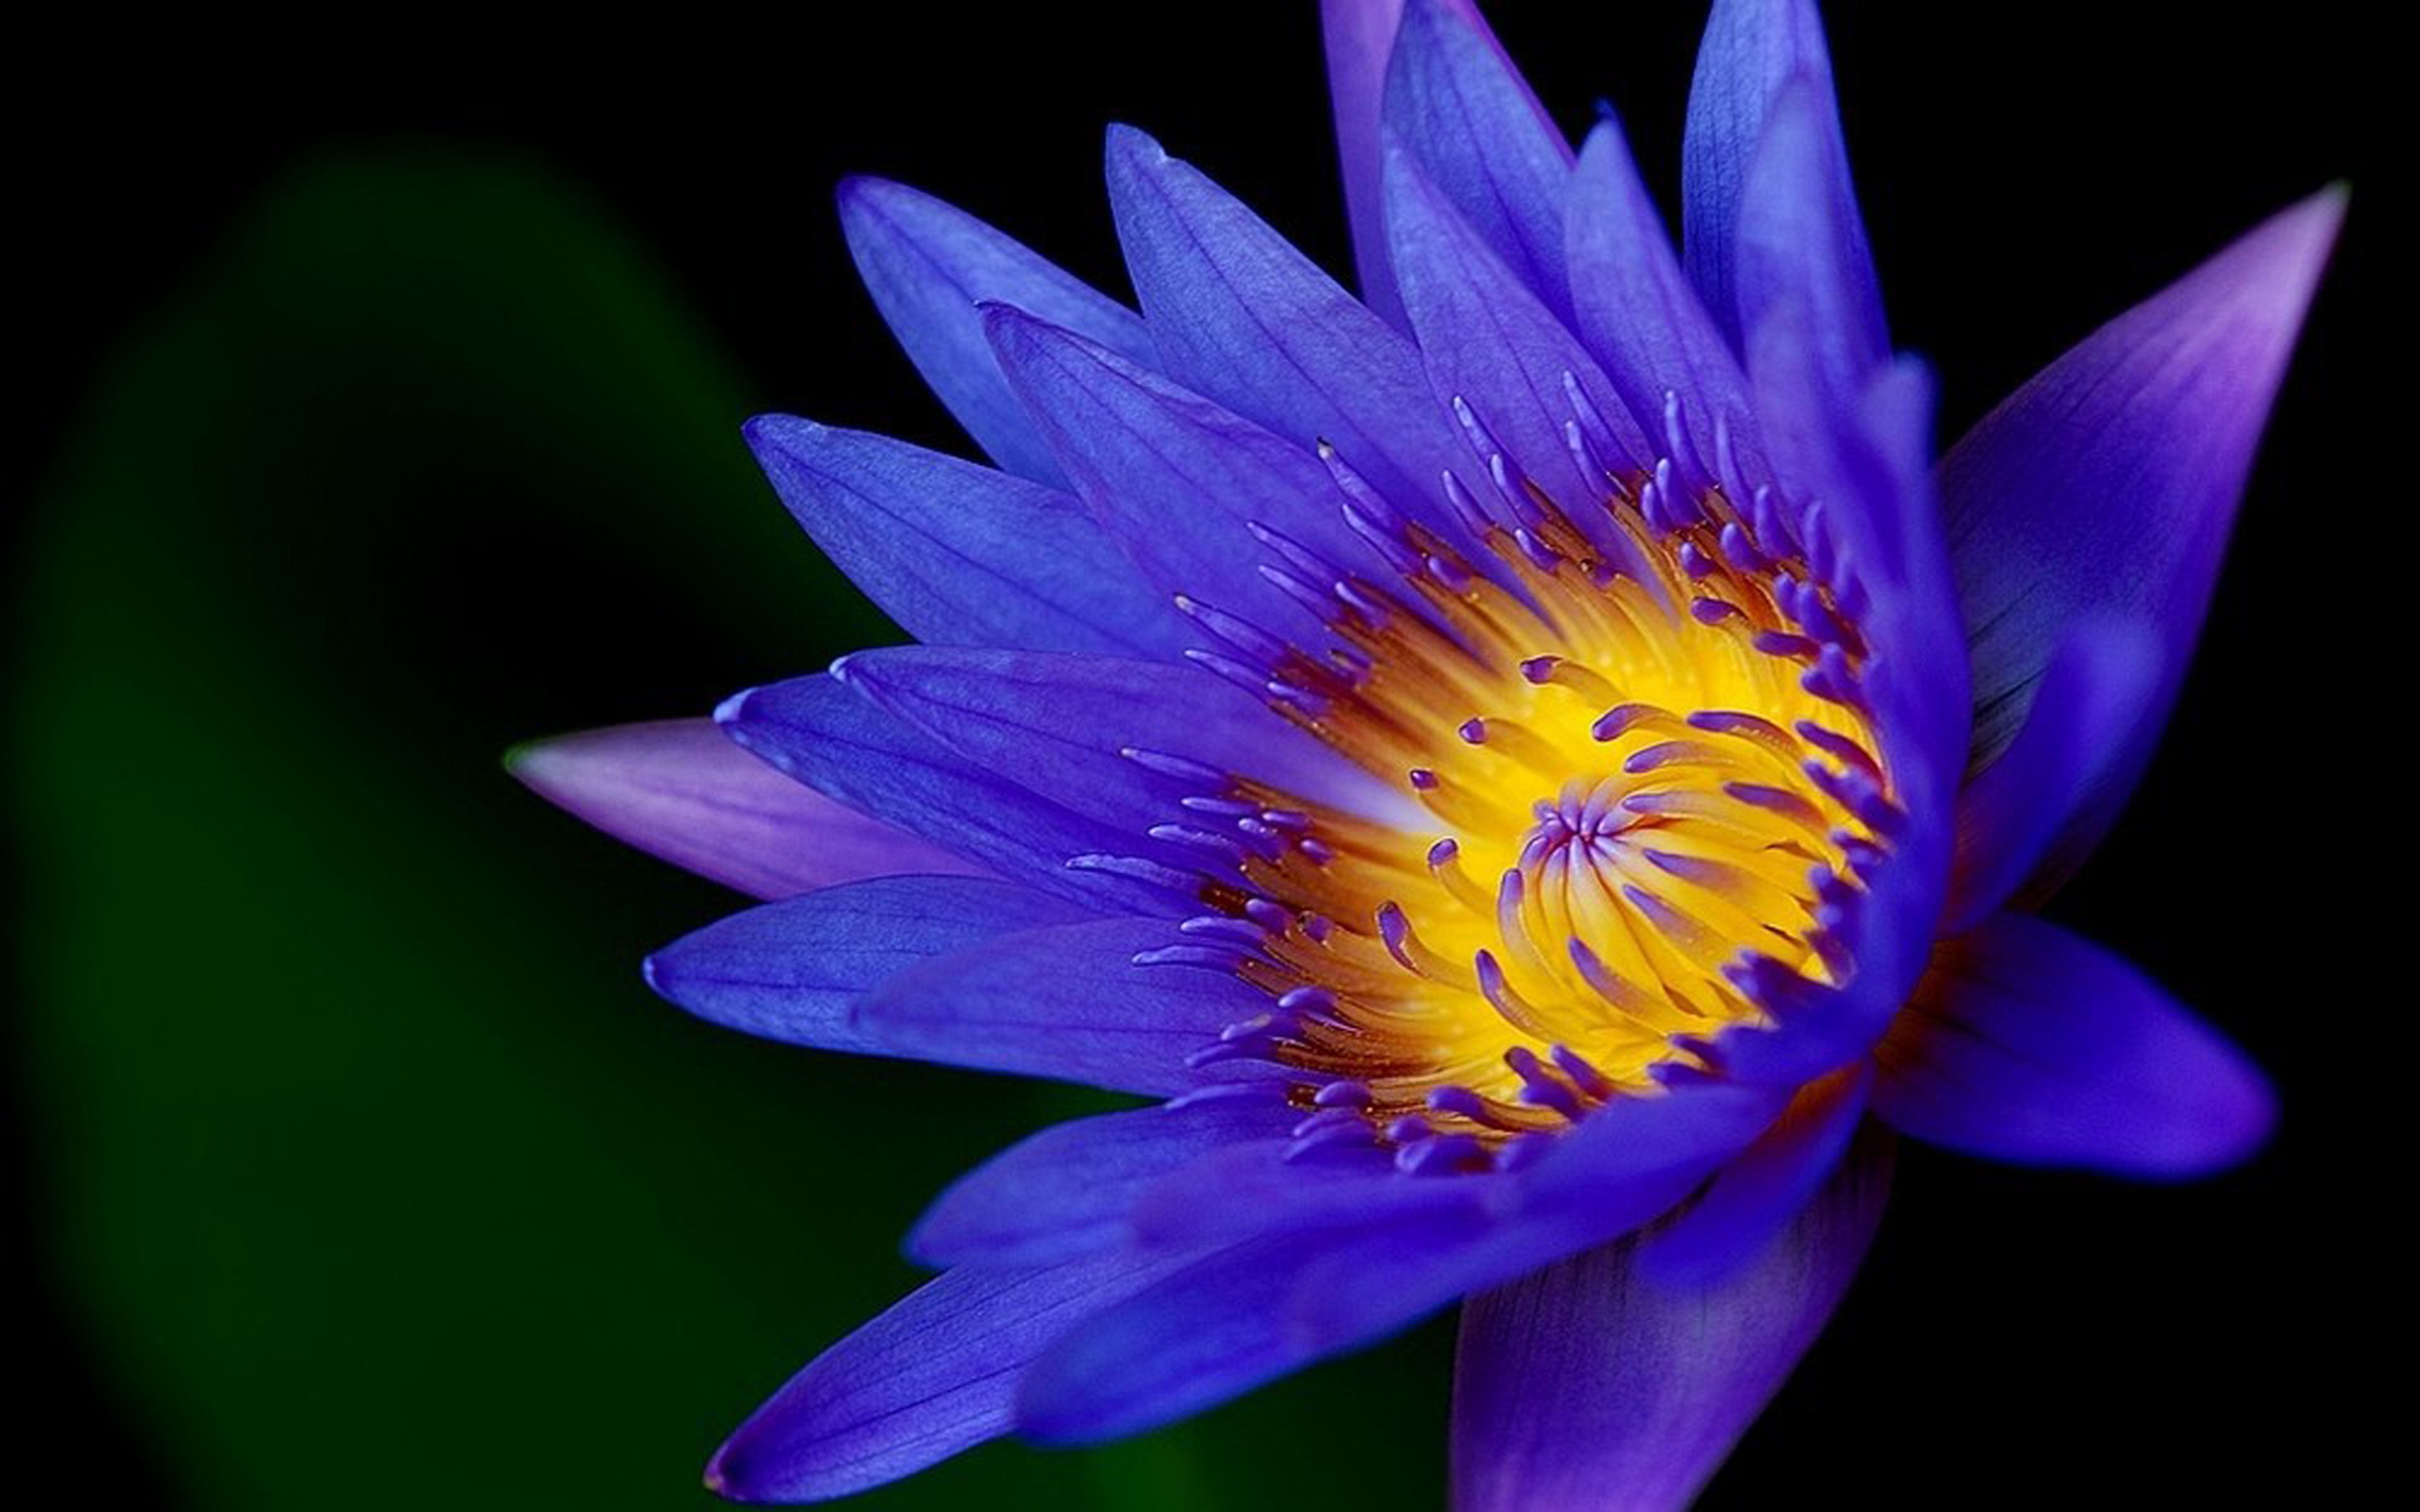 Lotus Flower Dark Blue Color HD Wallpaper For Mobile Phones And Laptops, Wallpaper13.com